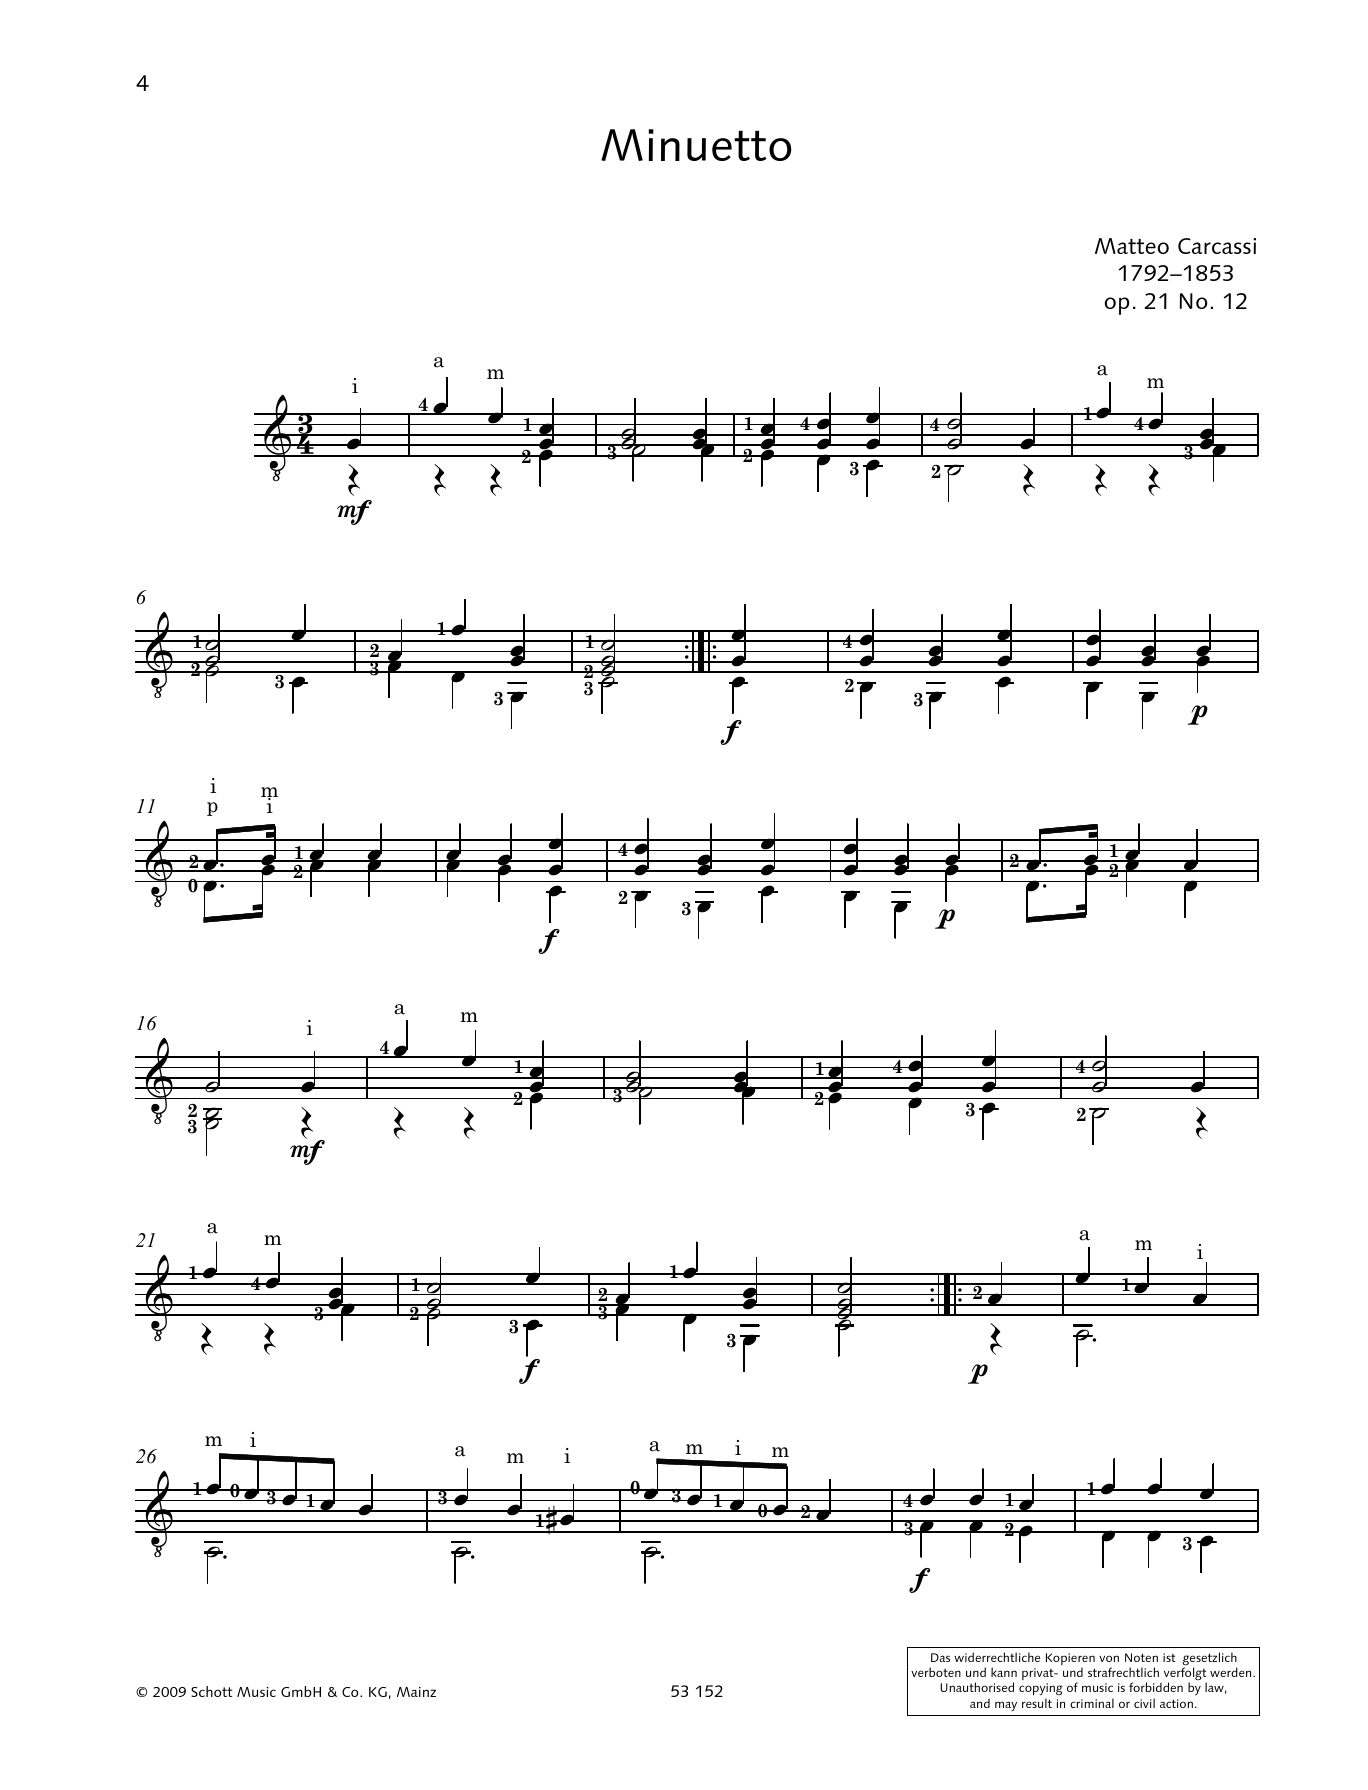 Konrad Ragossnig Minuetto Sheet Music Notes & Chords for Solo Guitar - Download or Print PDF